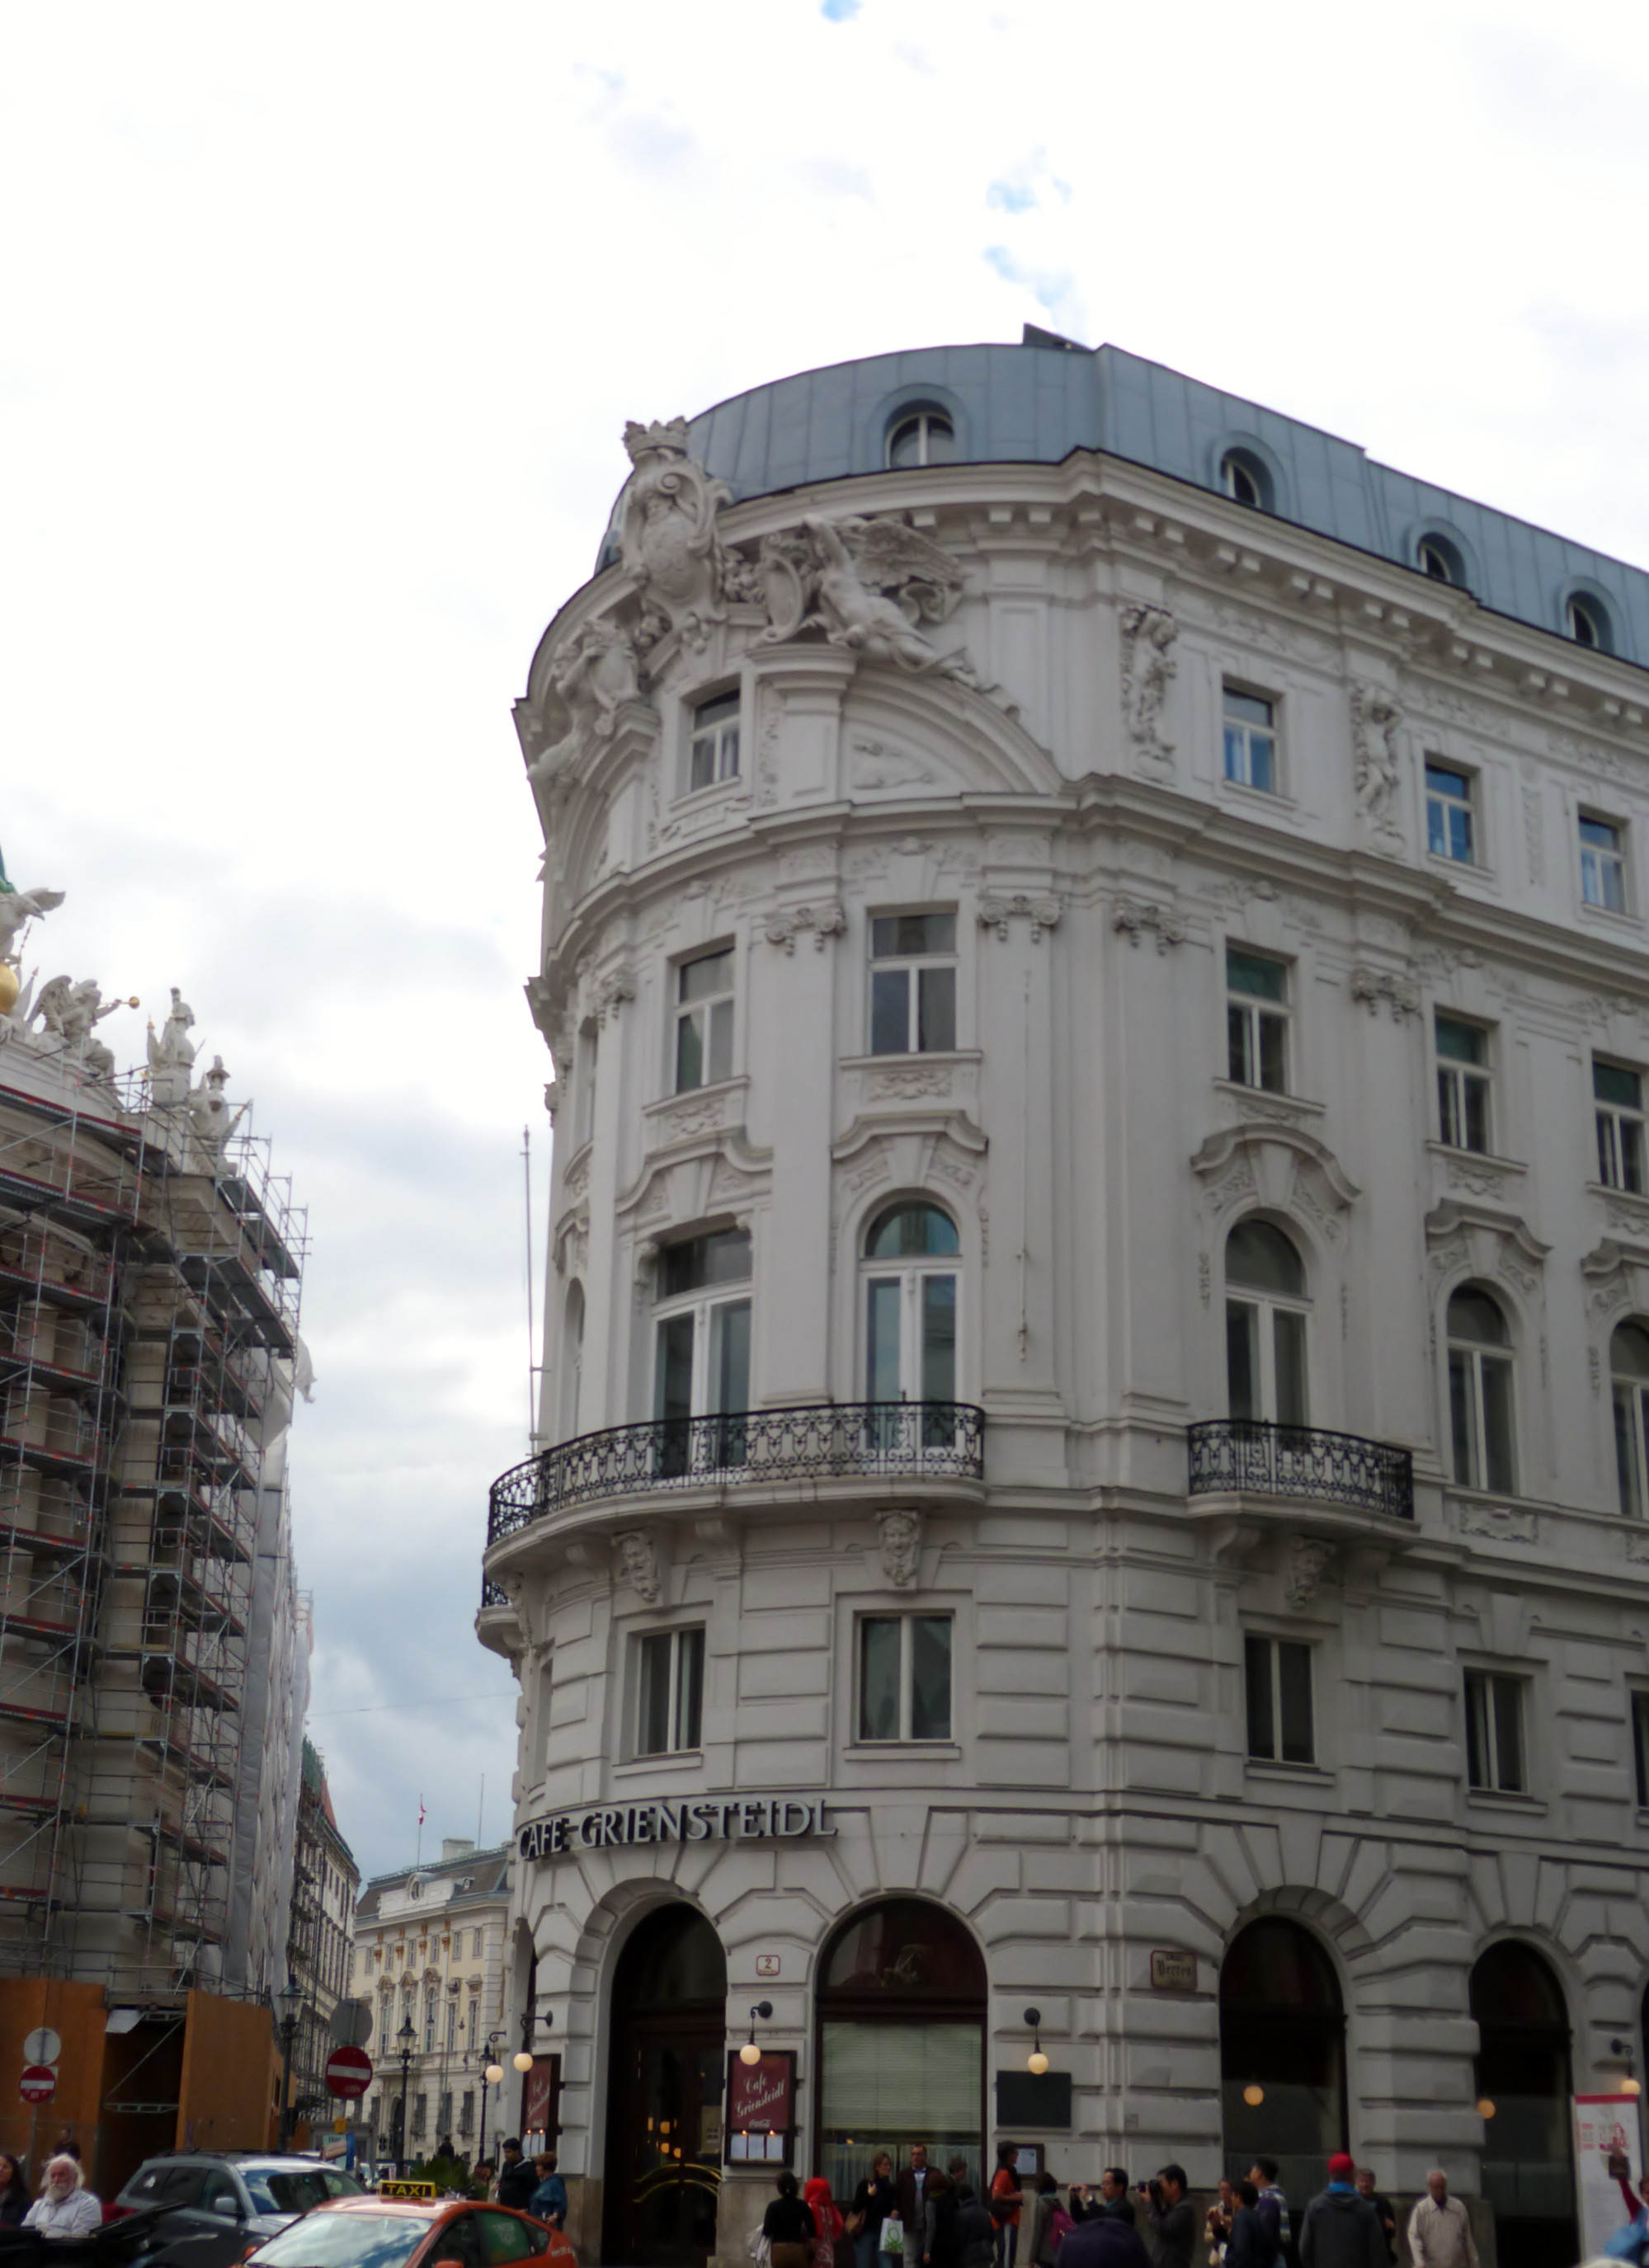 Palais Herberstein- Apartment Building